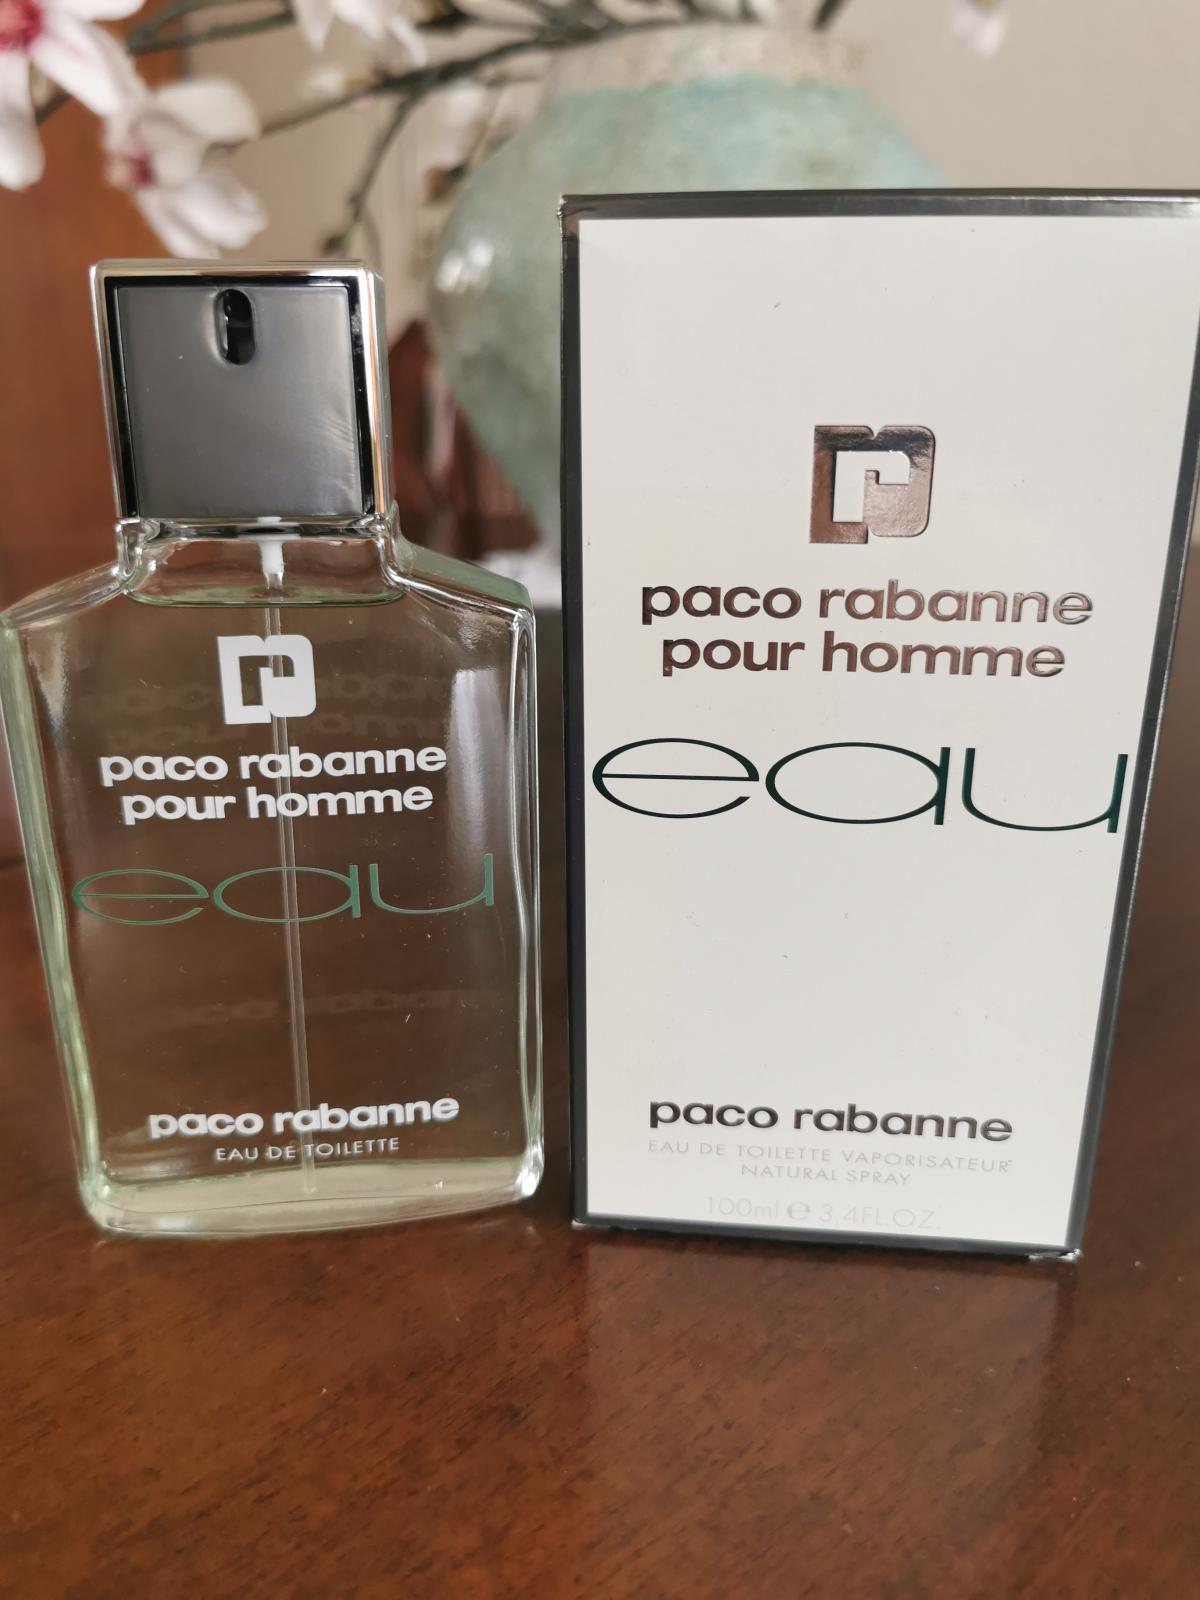 Eau Paco Rabanne Paco Rabanne cologne - a fragrance for men 2002